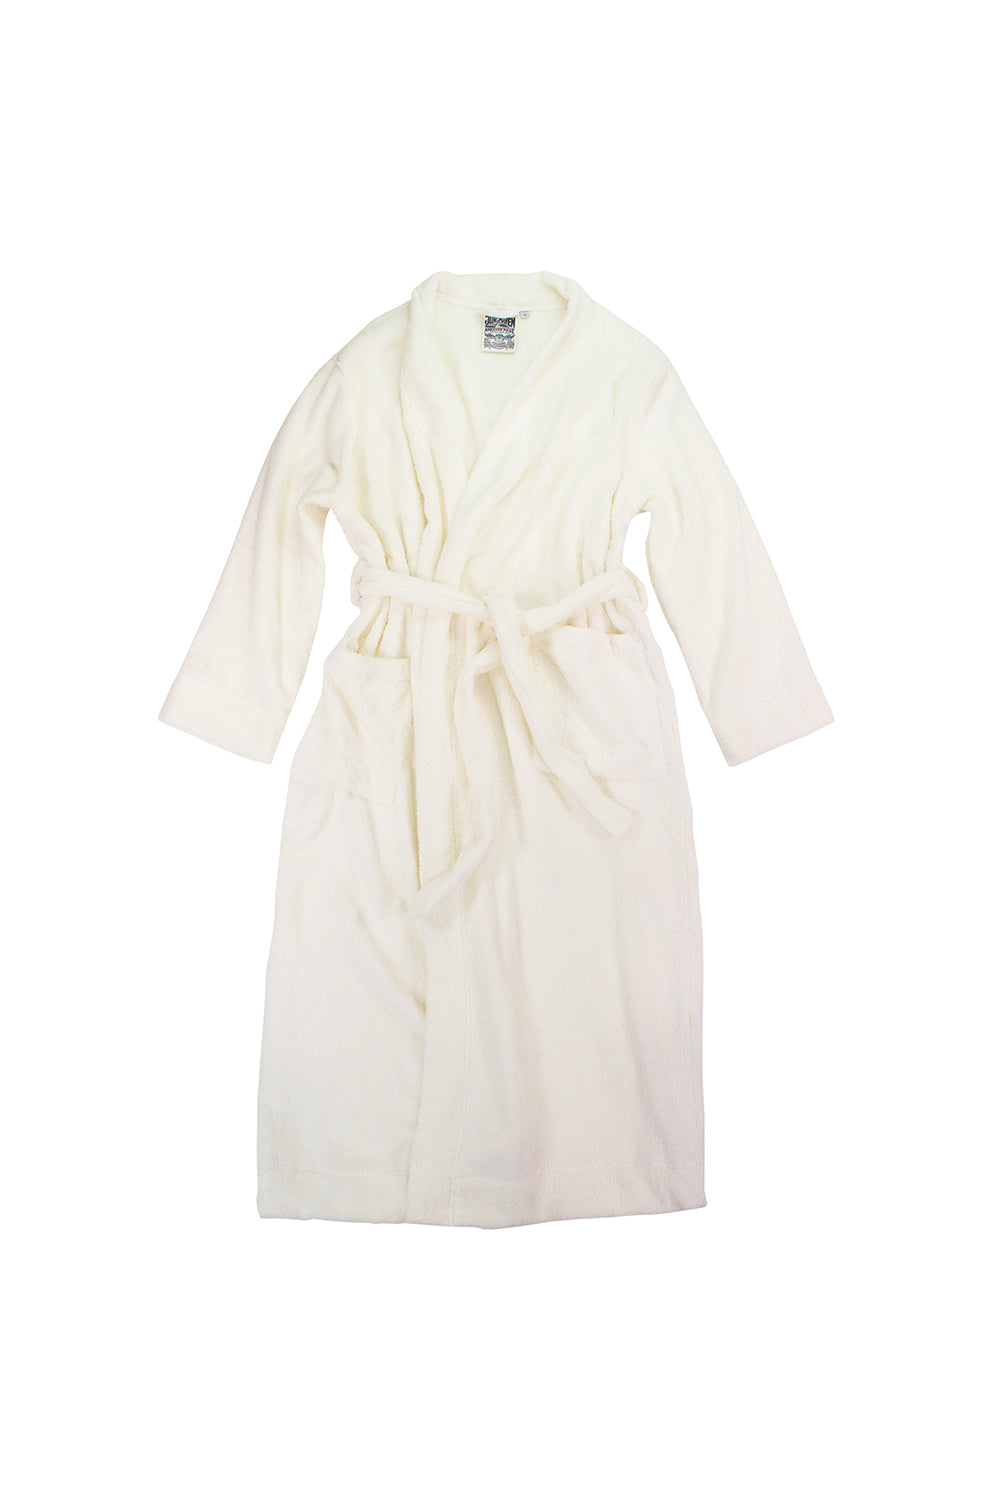 Bath Robe | Jungmaven Hemp Clothing & Accessories